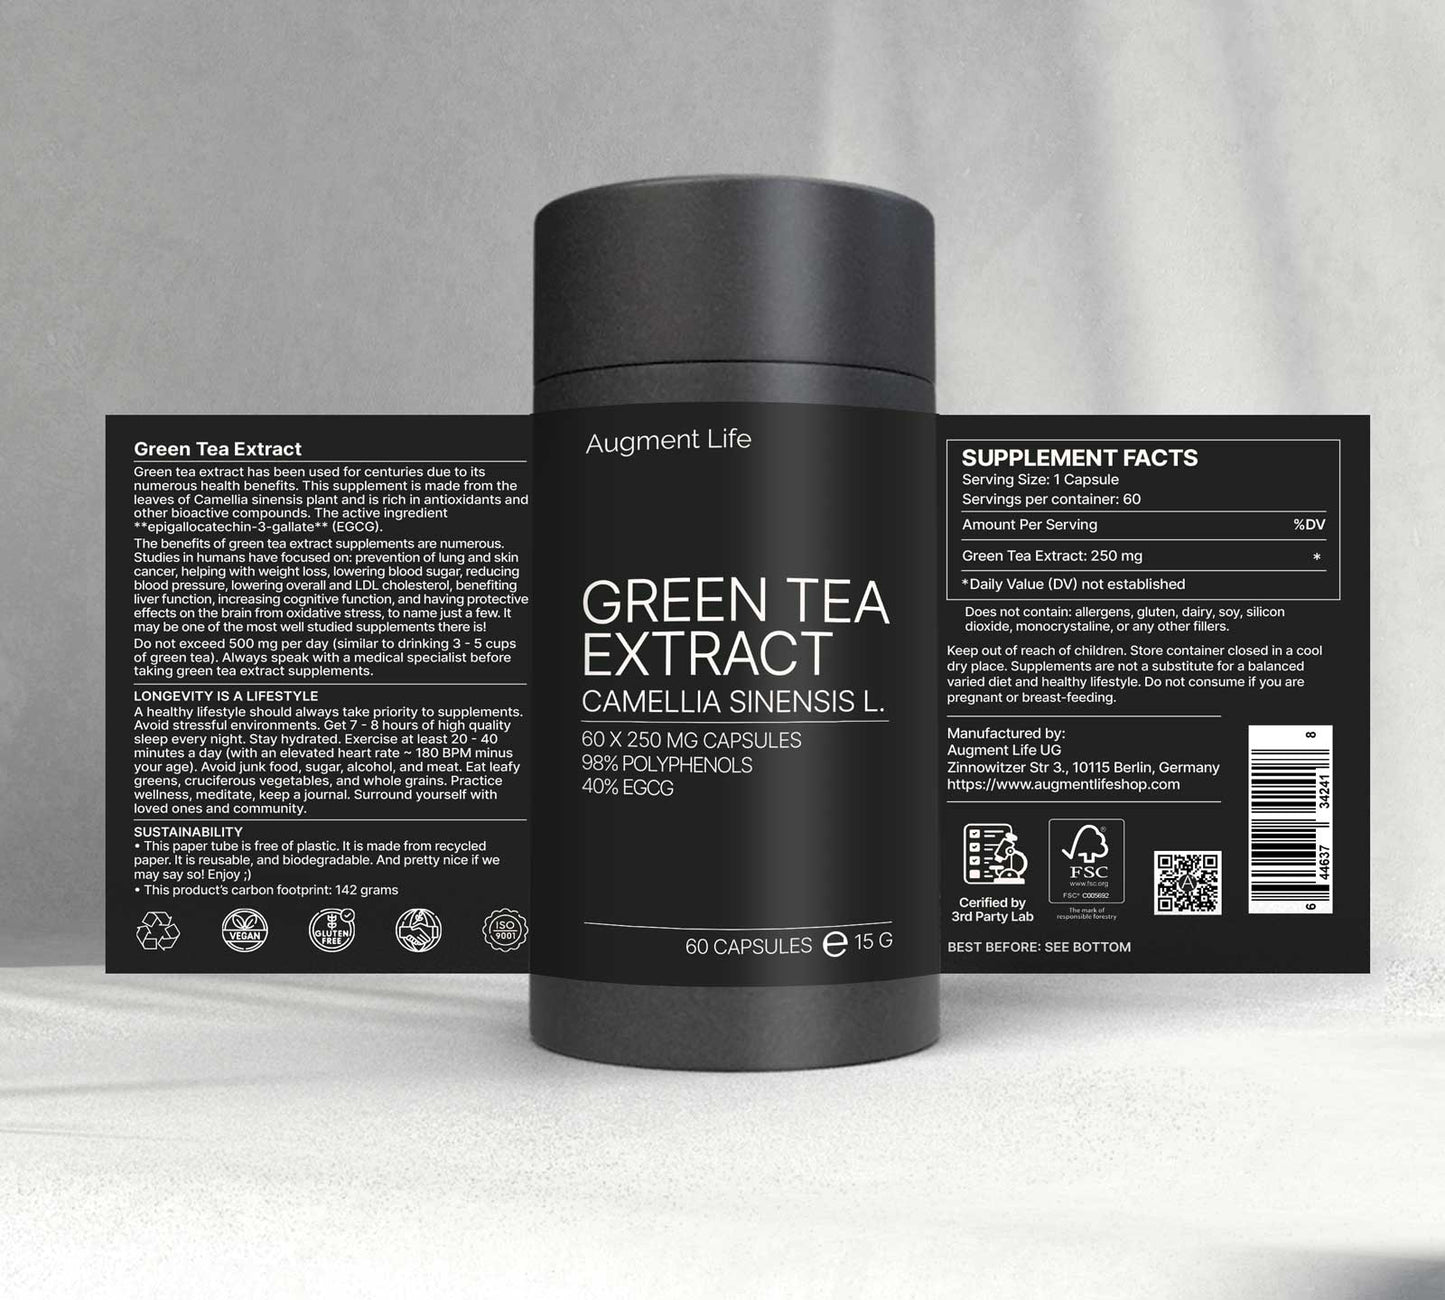 Green Tea Extract - 250 mg capsules - 40% EGCG - Camellia Sinensis L.